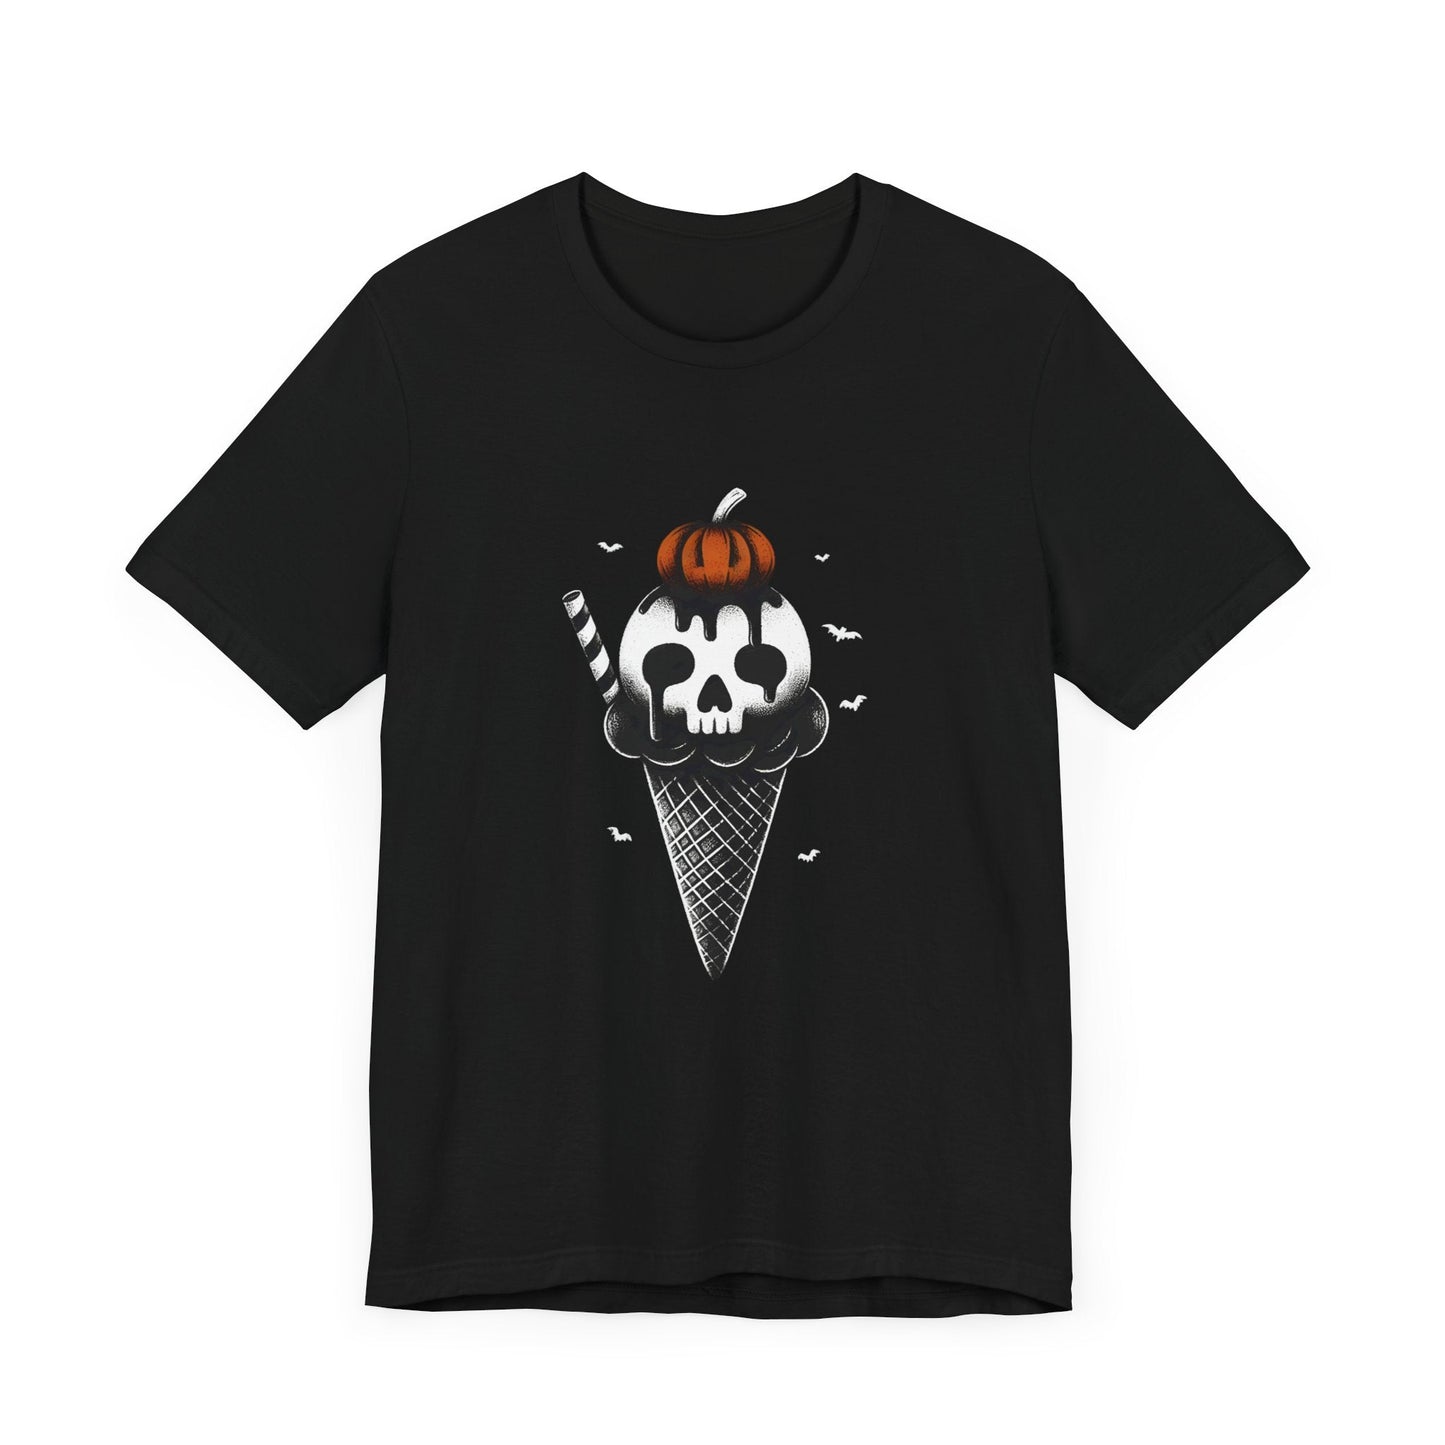 Spooky Ice Cream Cone Short Sleeve Tee ShirtT - ShirtVTZdesignsBlackXSclothingCottonCrew neck